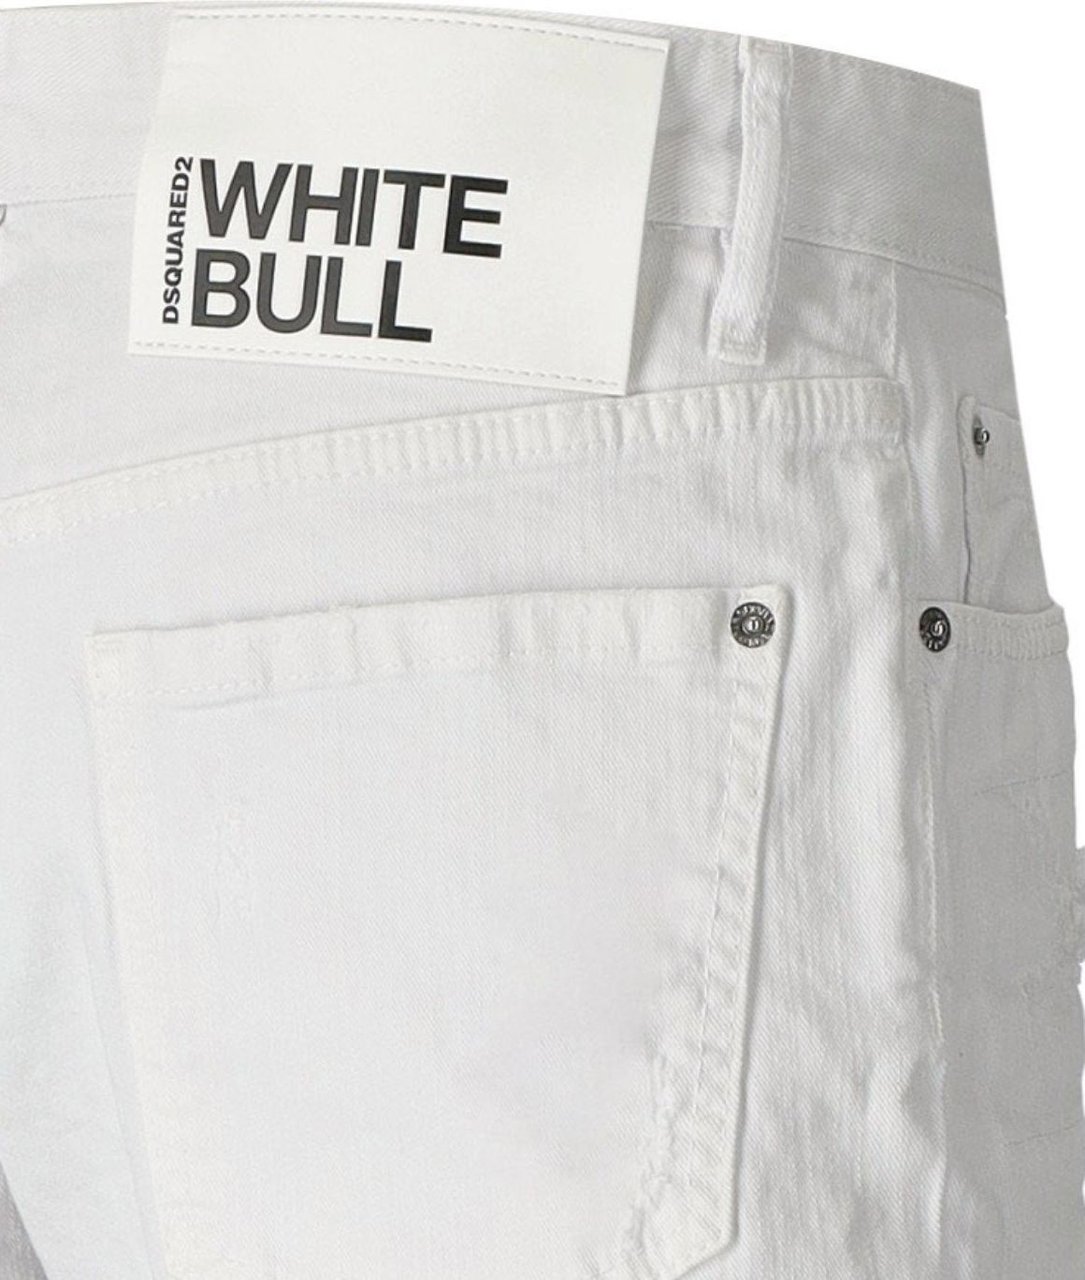 Dsquared2 Bull Marine White Bermuda Shorts White Wit